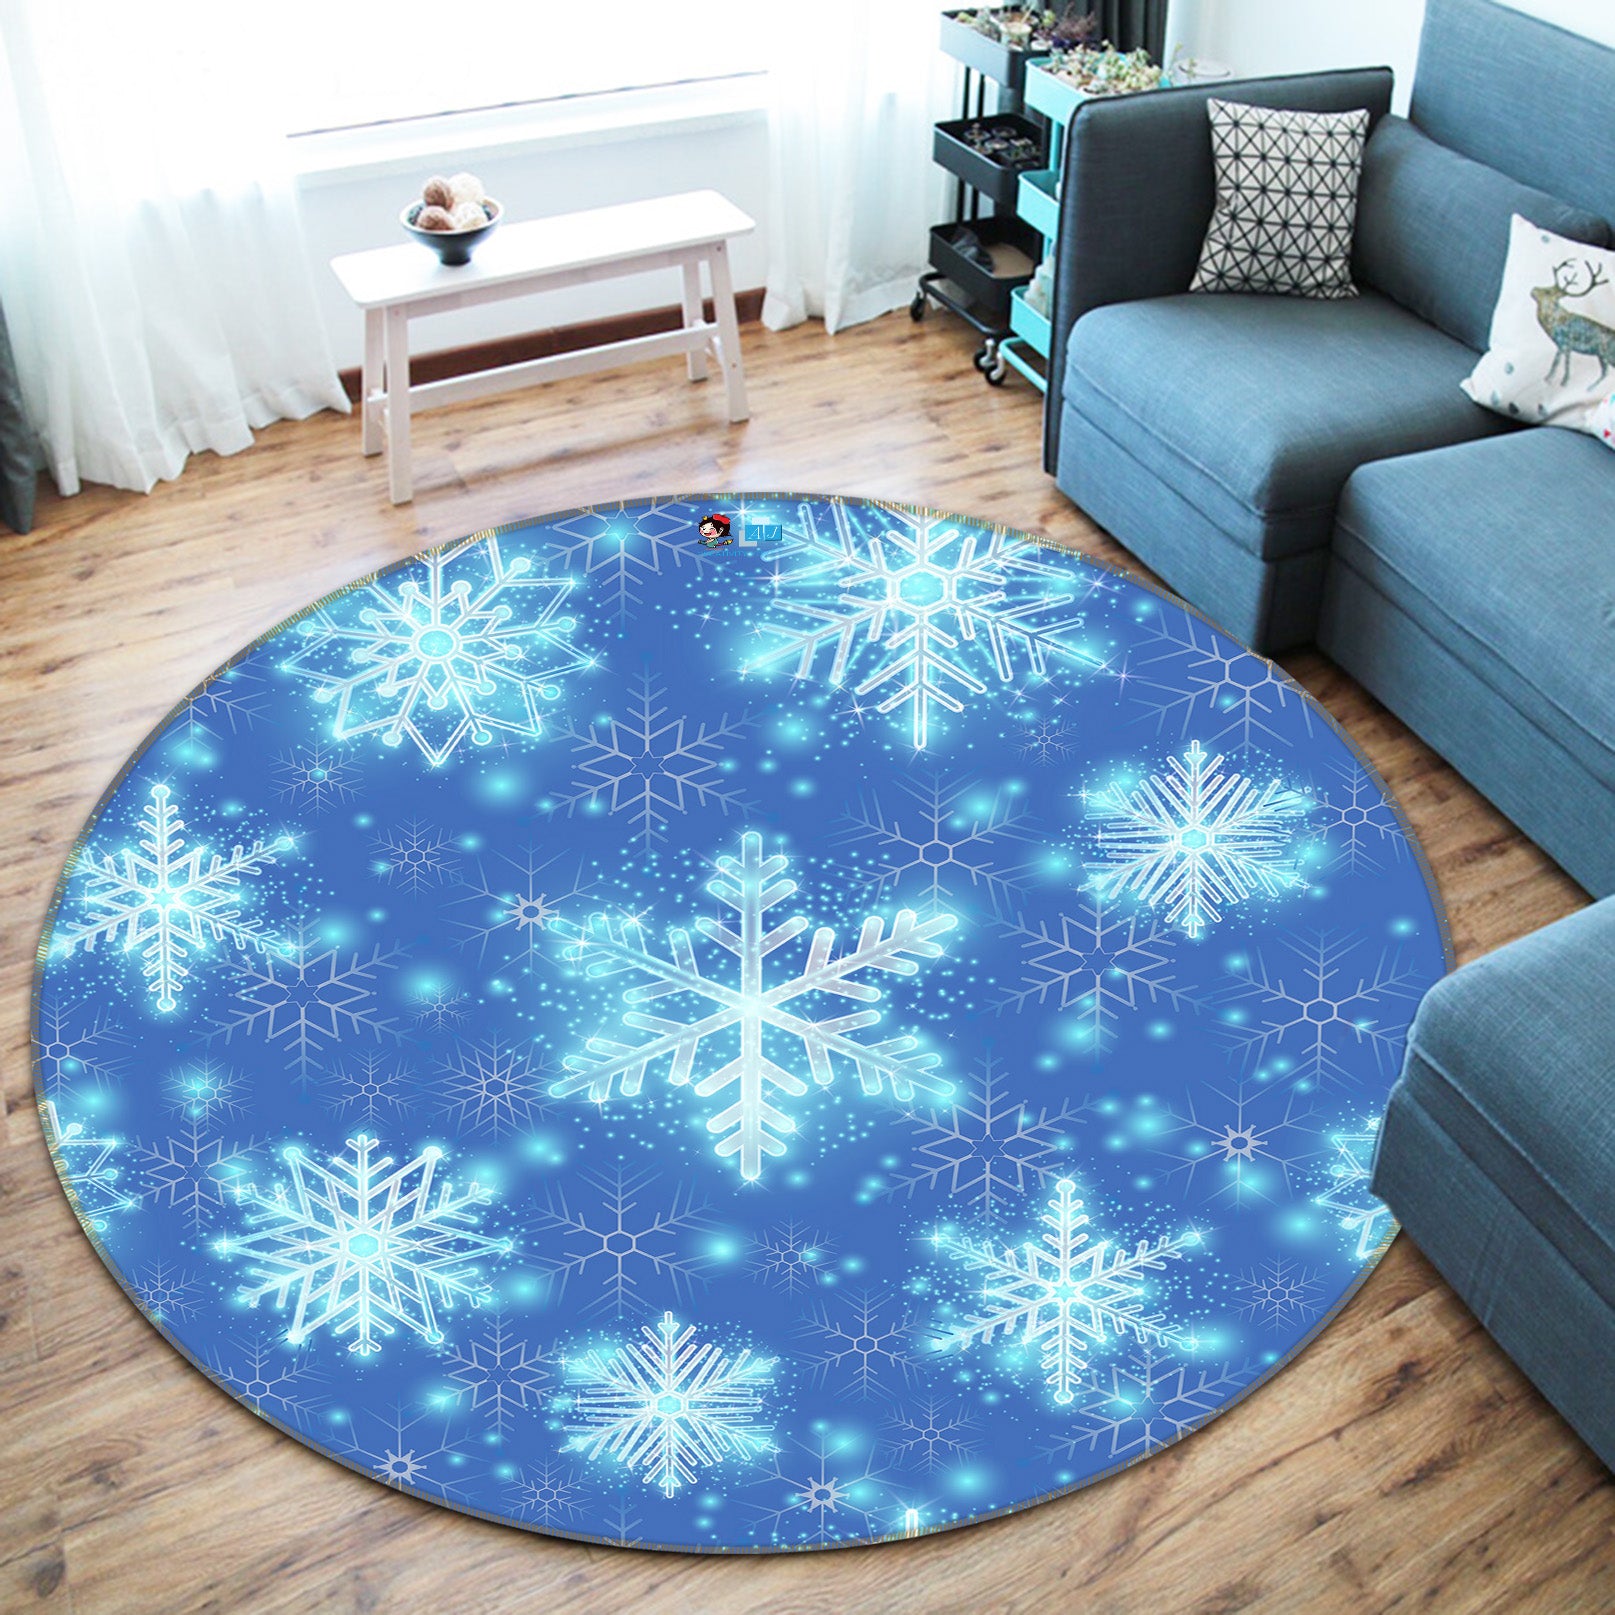 3D Blue Snowflakes 55269 Christmas Round Non Slip Rug Mat Xmas